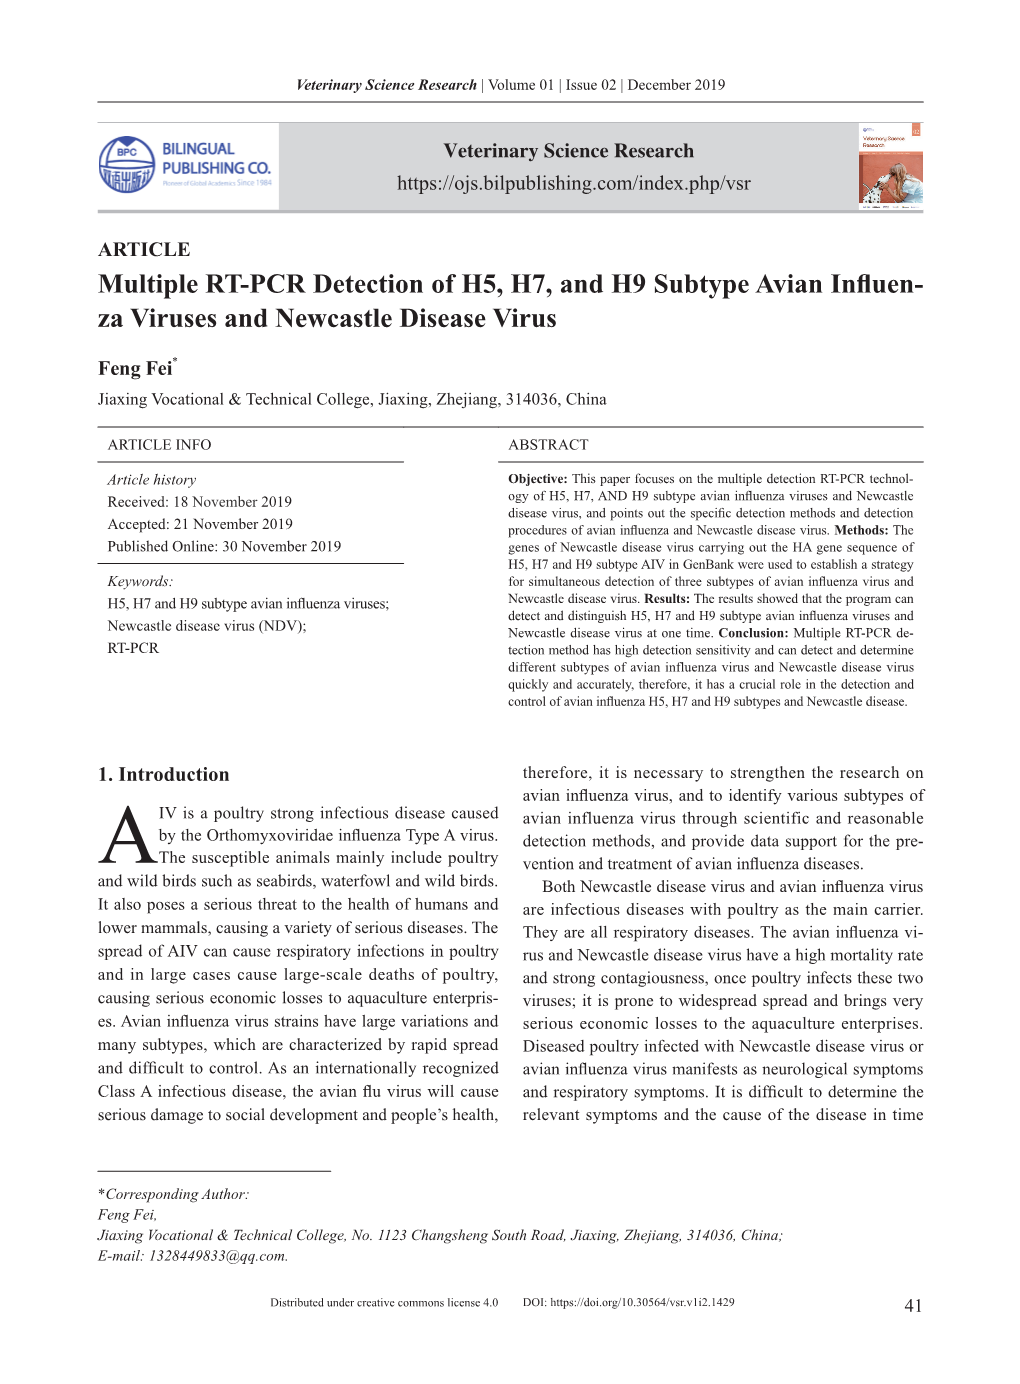 Multiple RT-PCR Detection of H5, H7, and H9 Subtype Avian Influen- Za Viruses and Newcastle Disease Virus